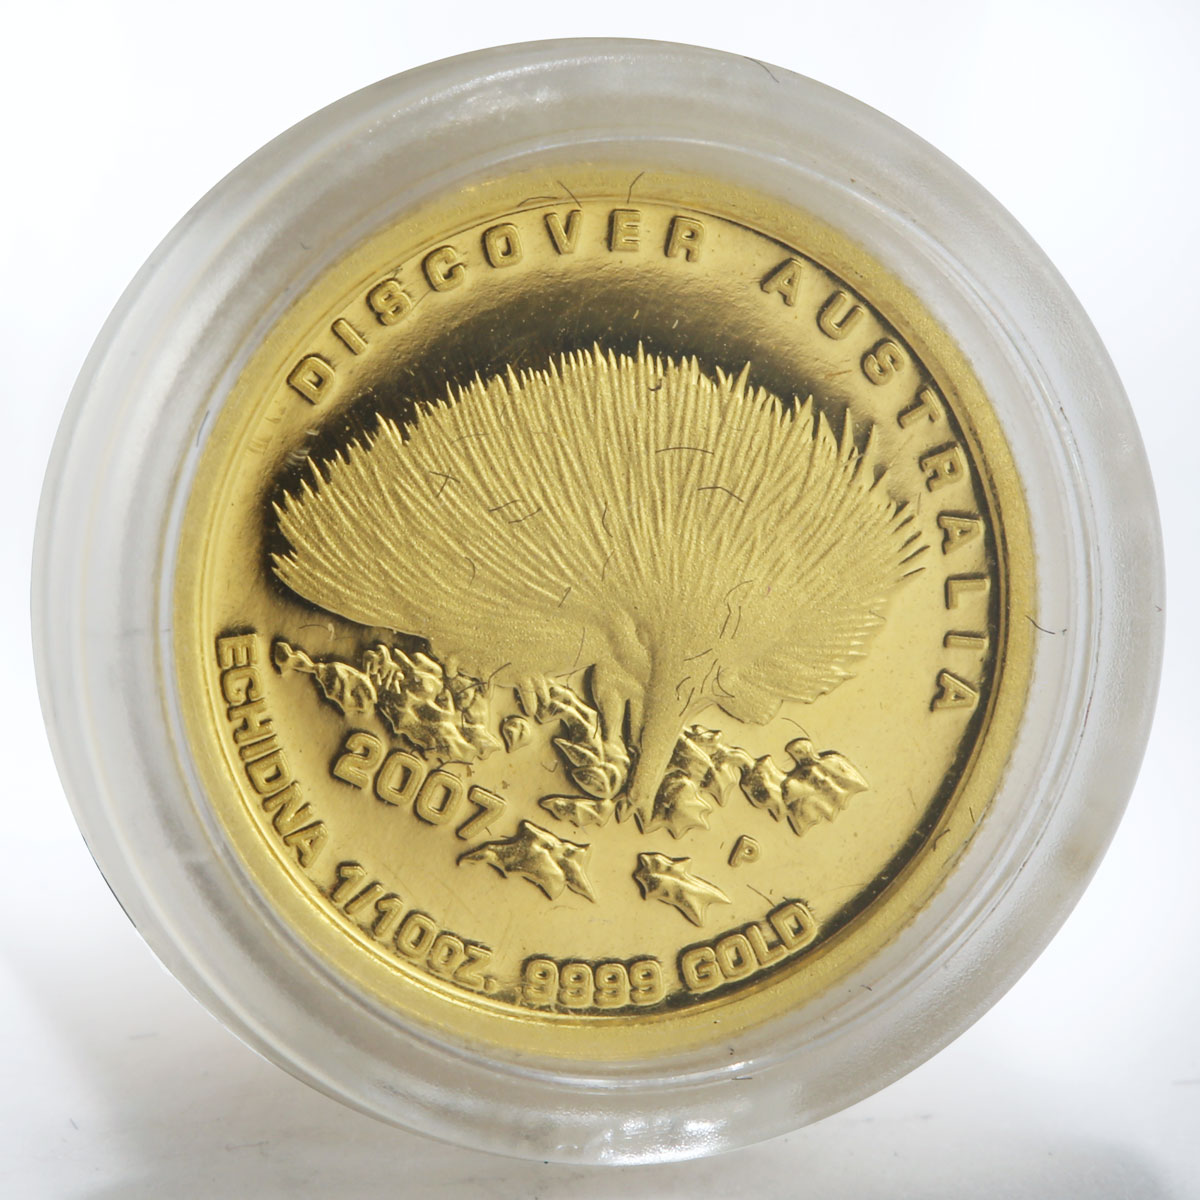 Australia set 5 coins 15 dollars Discover Australia gold coin 1/10 oz 2007